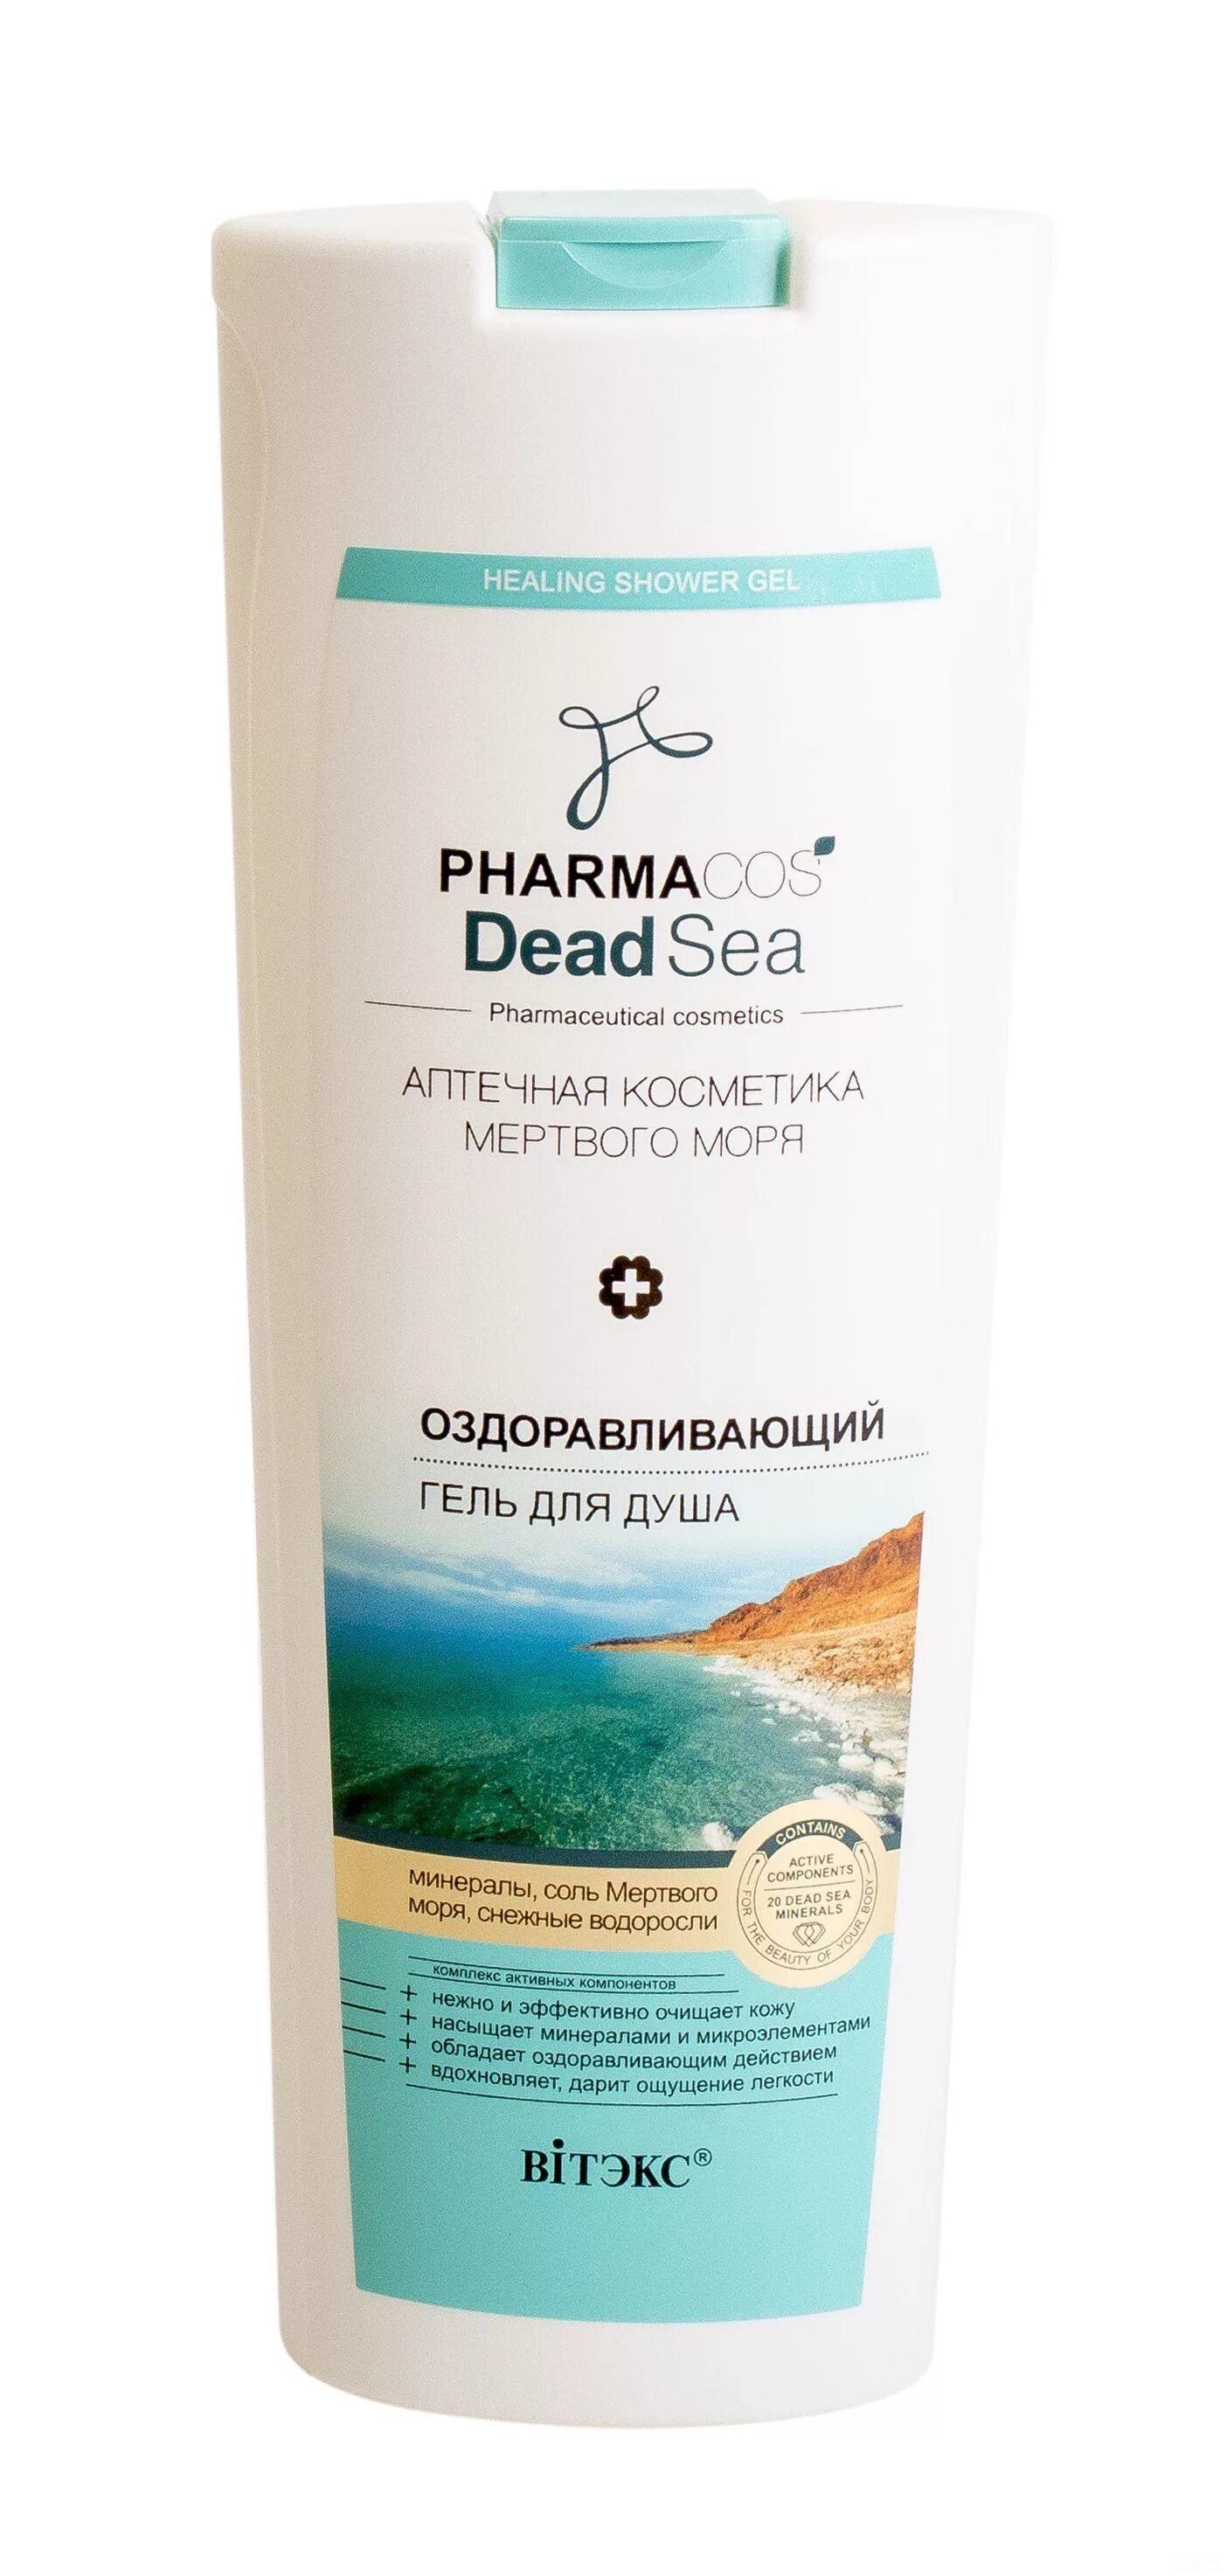 Sea gel. Pharmacos Dead Sea гель для душа. Гель для душа Витэкс с минералами 500мл. Пена для ванн Pharmacos Dead Sea ванна Клеопатры 500 мл/Витэкс/22/опт. Пена для ванны 500мл ванна Клеопатры Pharmacos Беларусь.